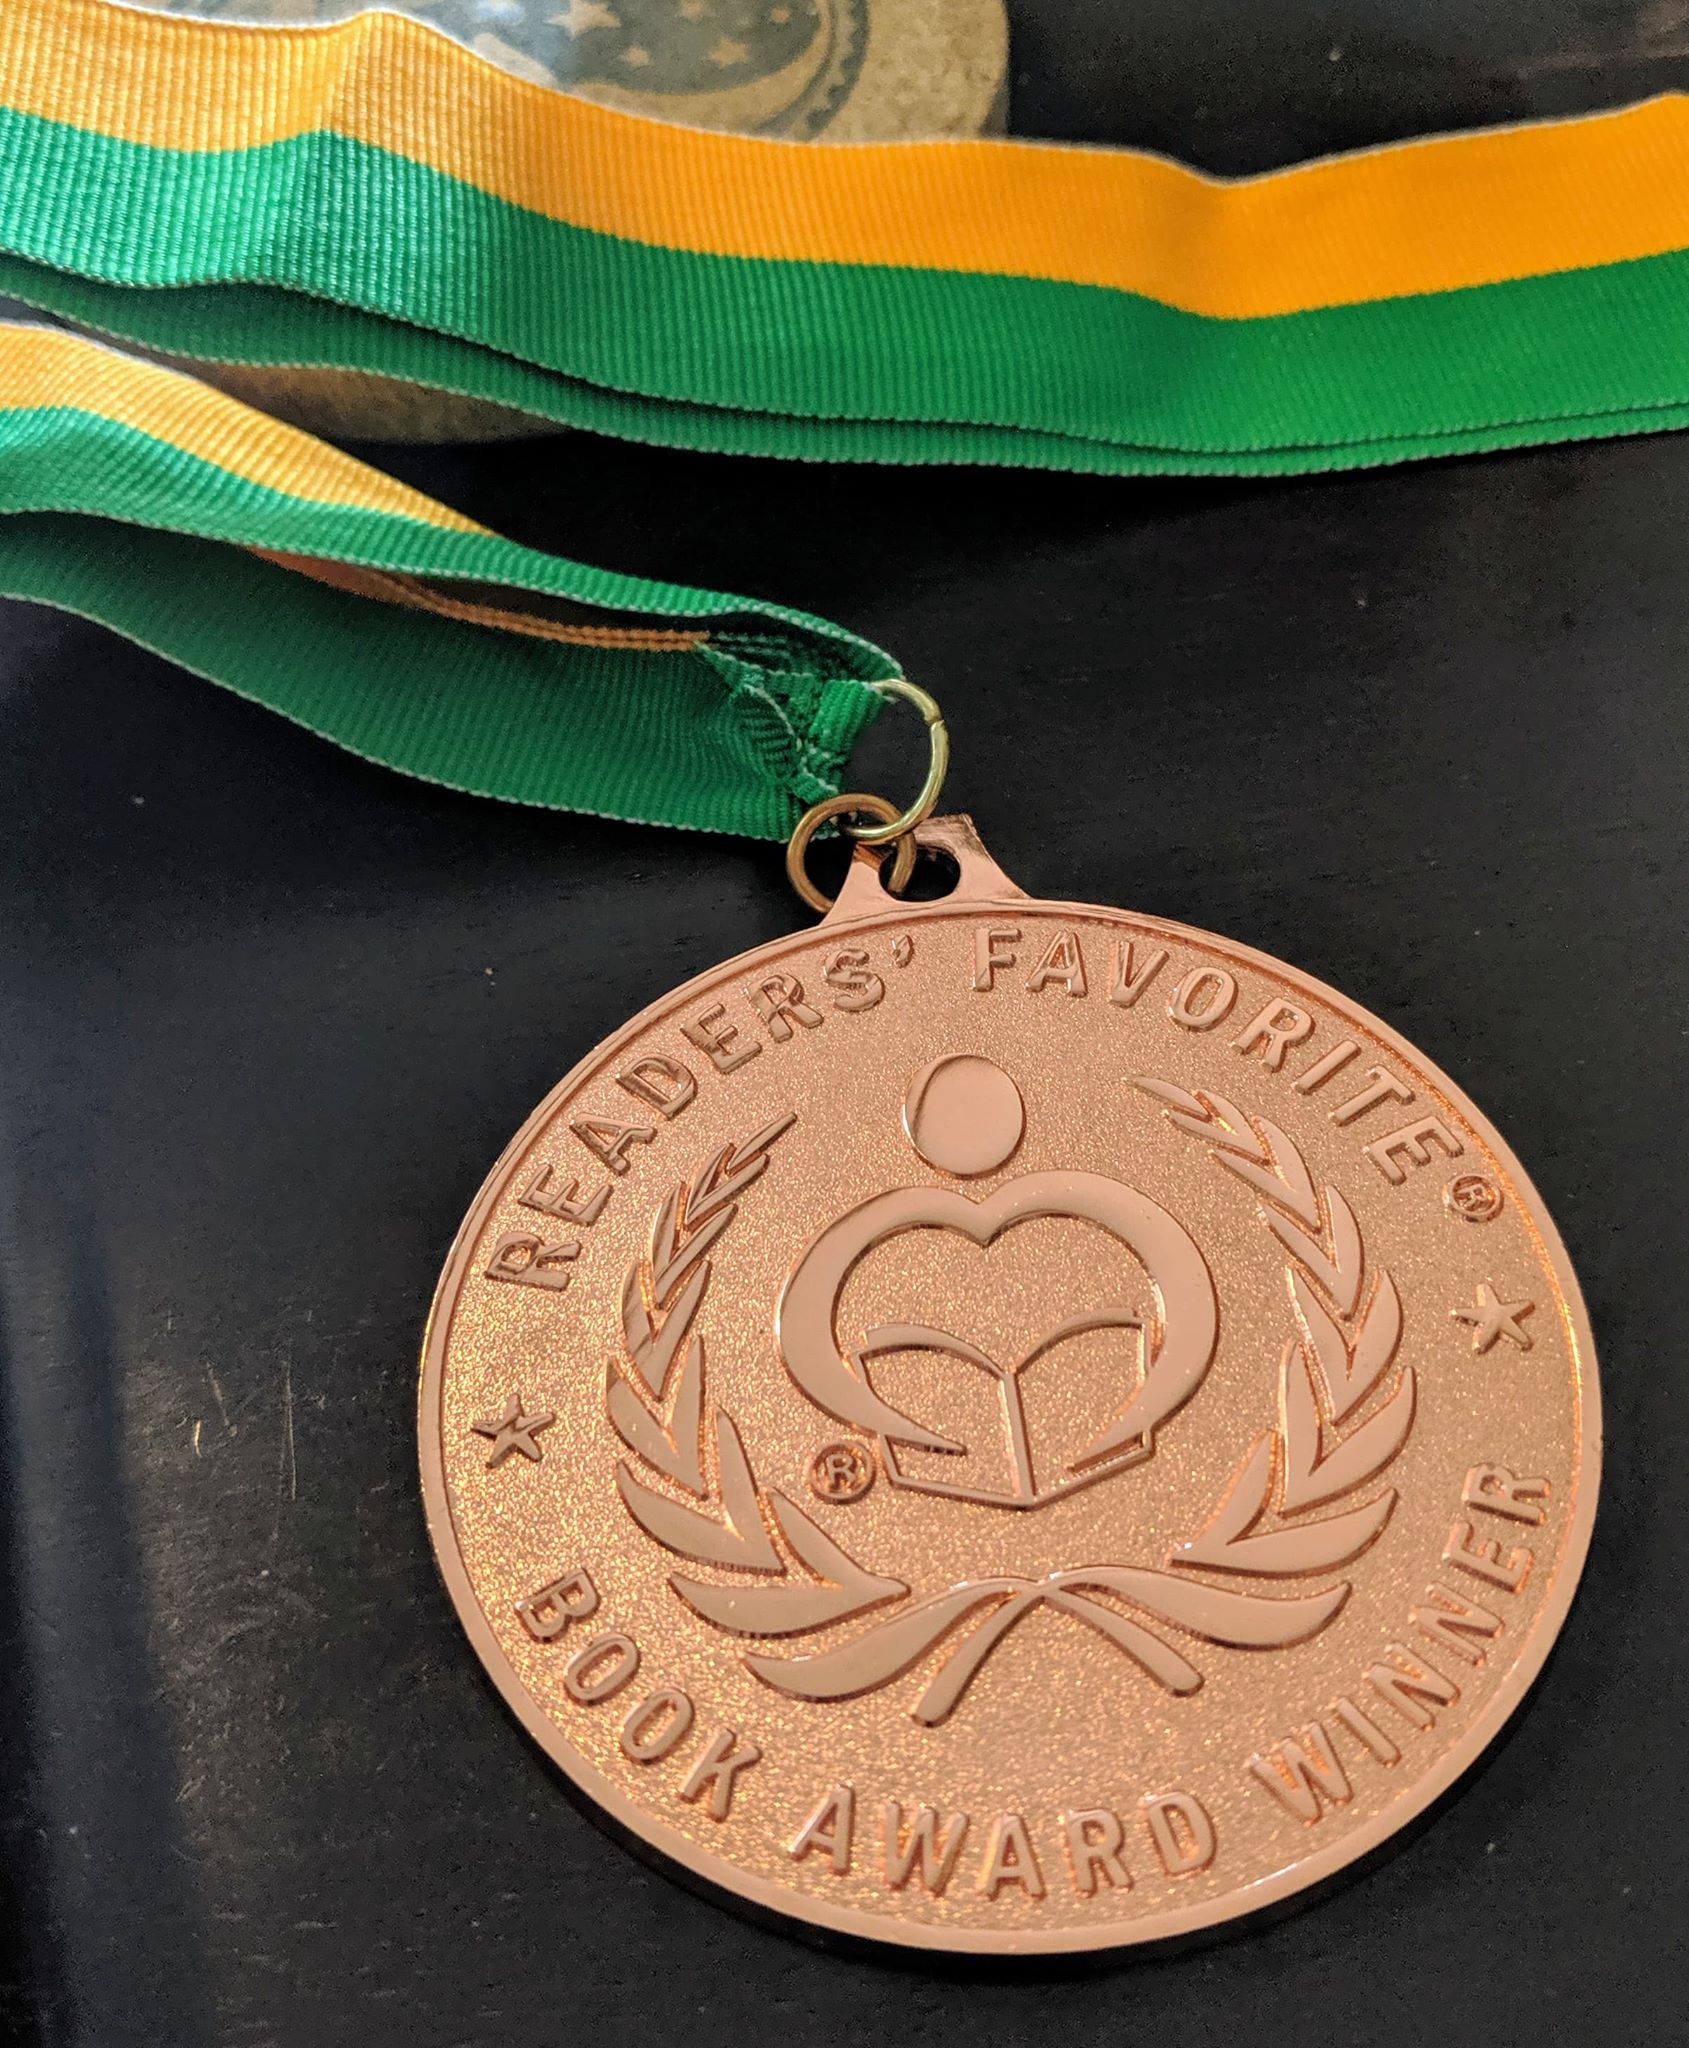 Award Medal